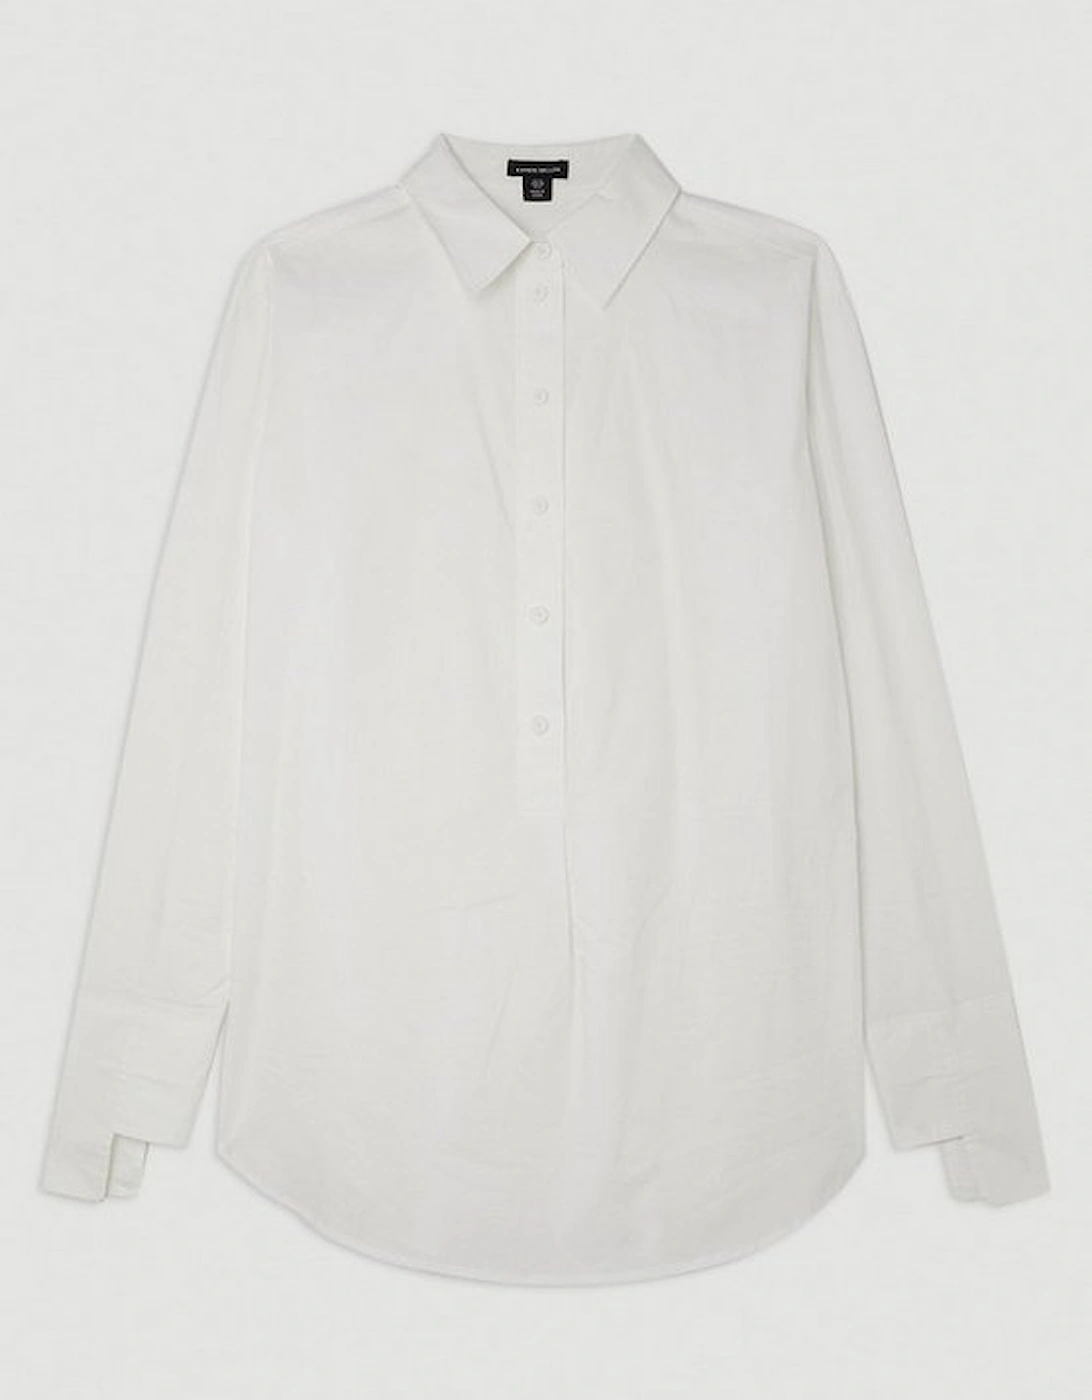 The Founder Cotton Poplin Woven Shirt